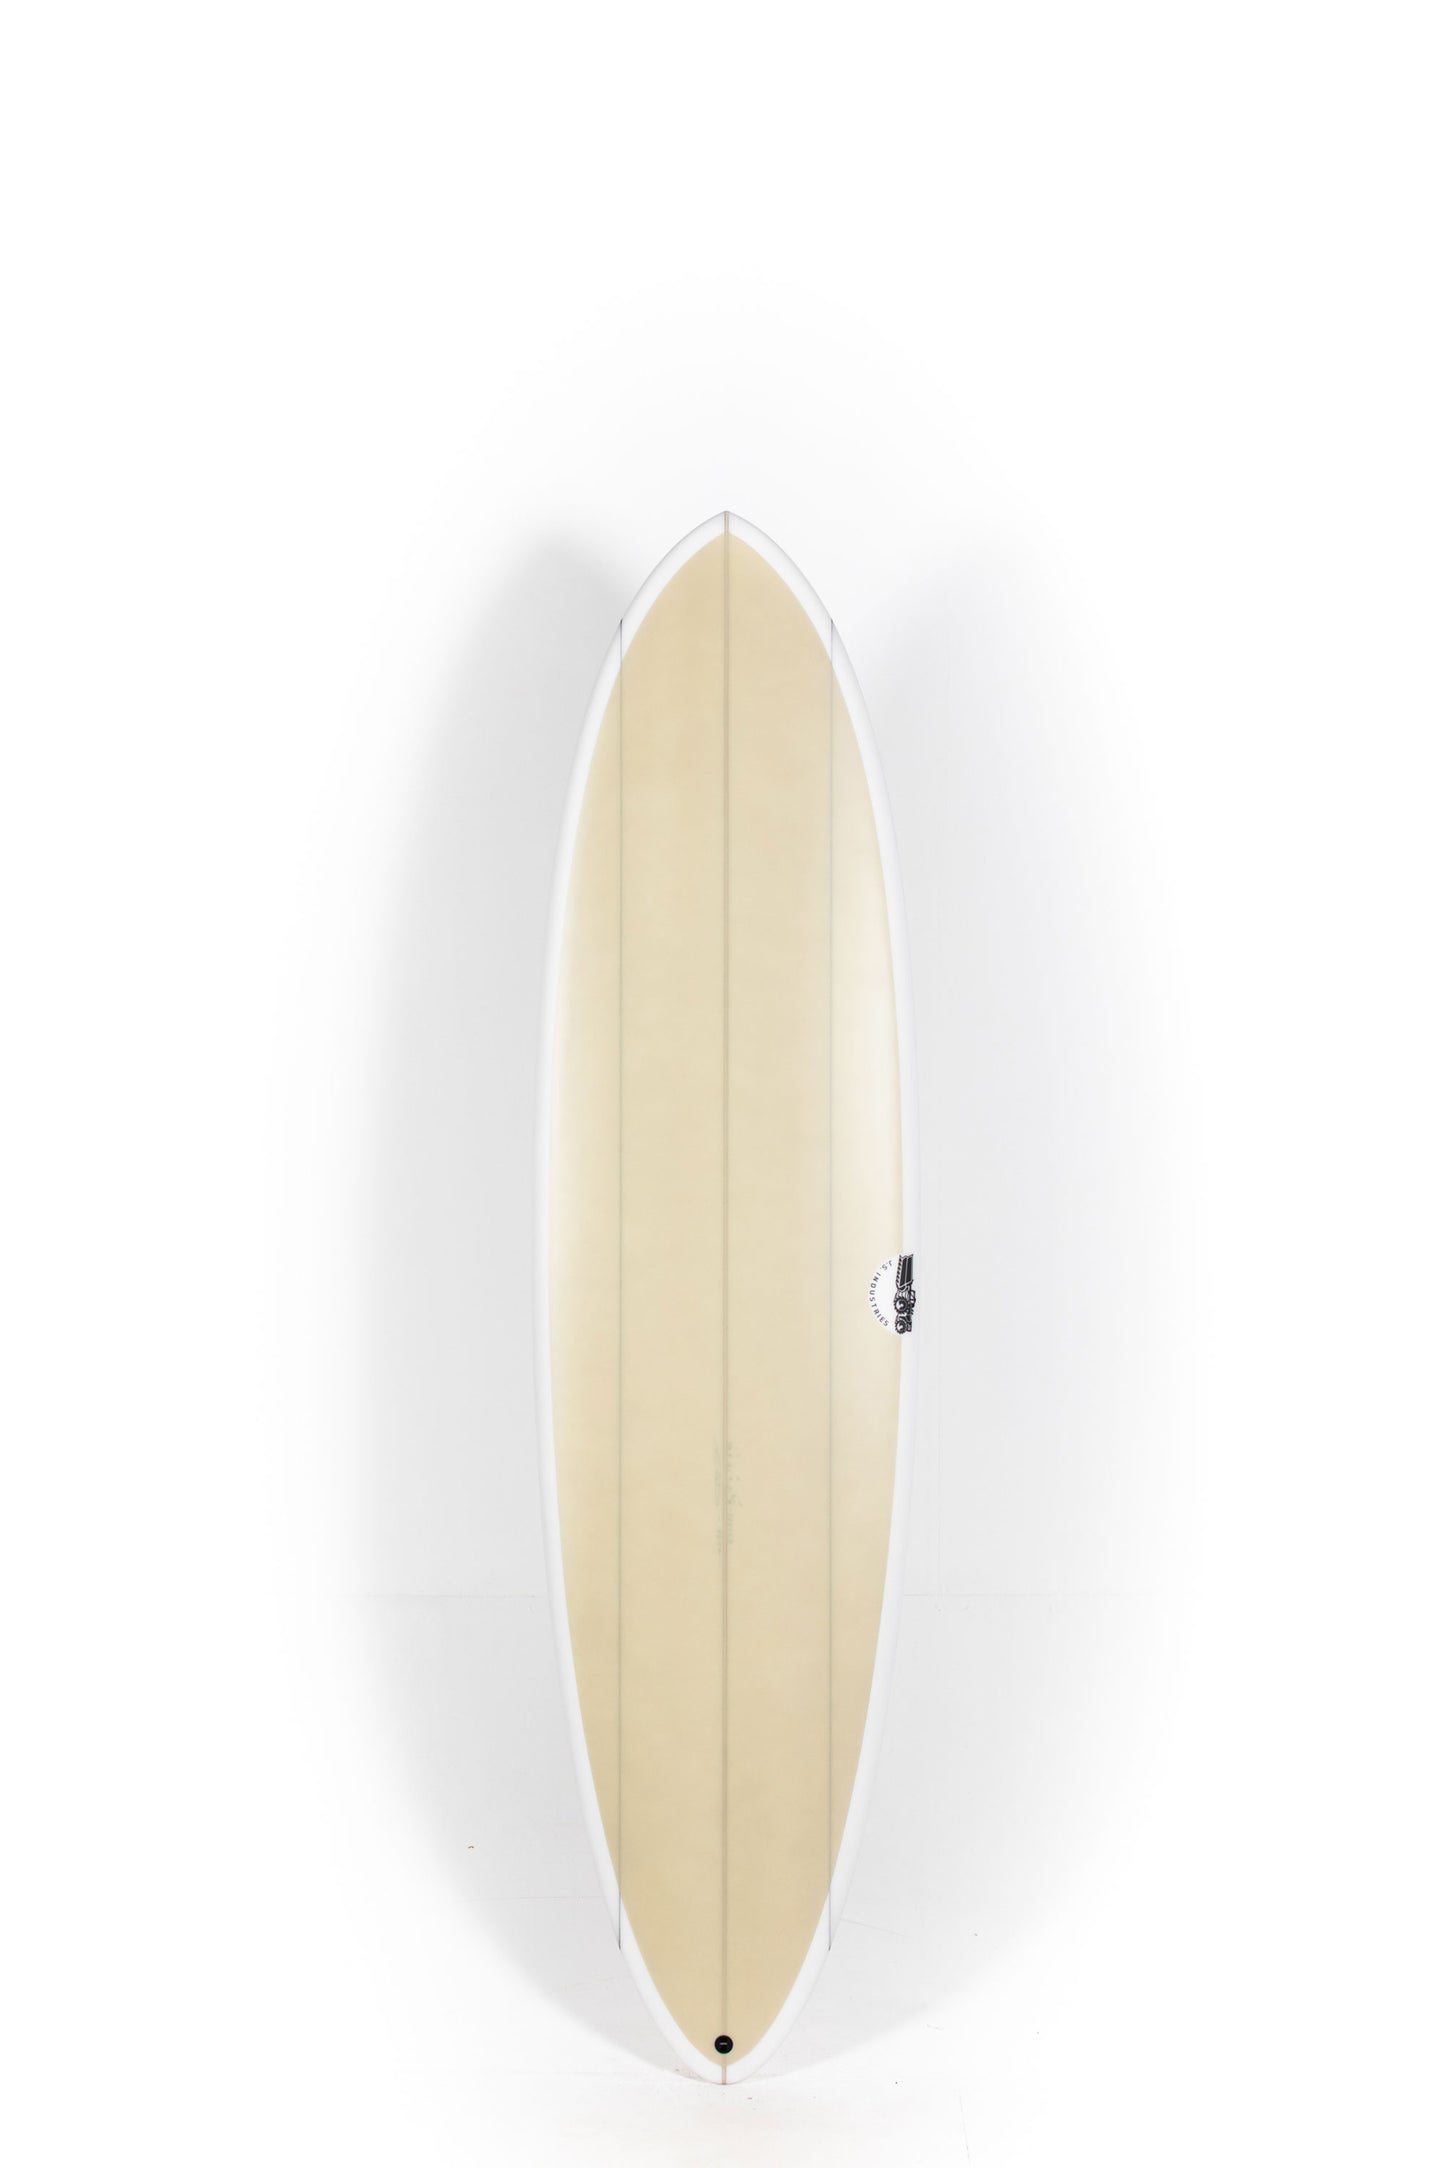 Pukas Surf Shop - JS Surfboards - BIG BARON - 7'0" x 21 x 2,75 x 43L. - BIGBARONTAN